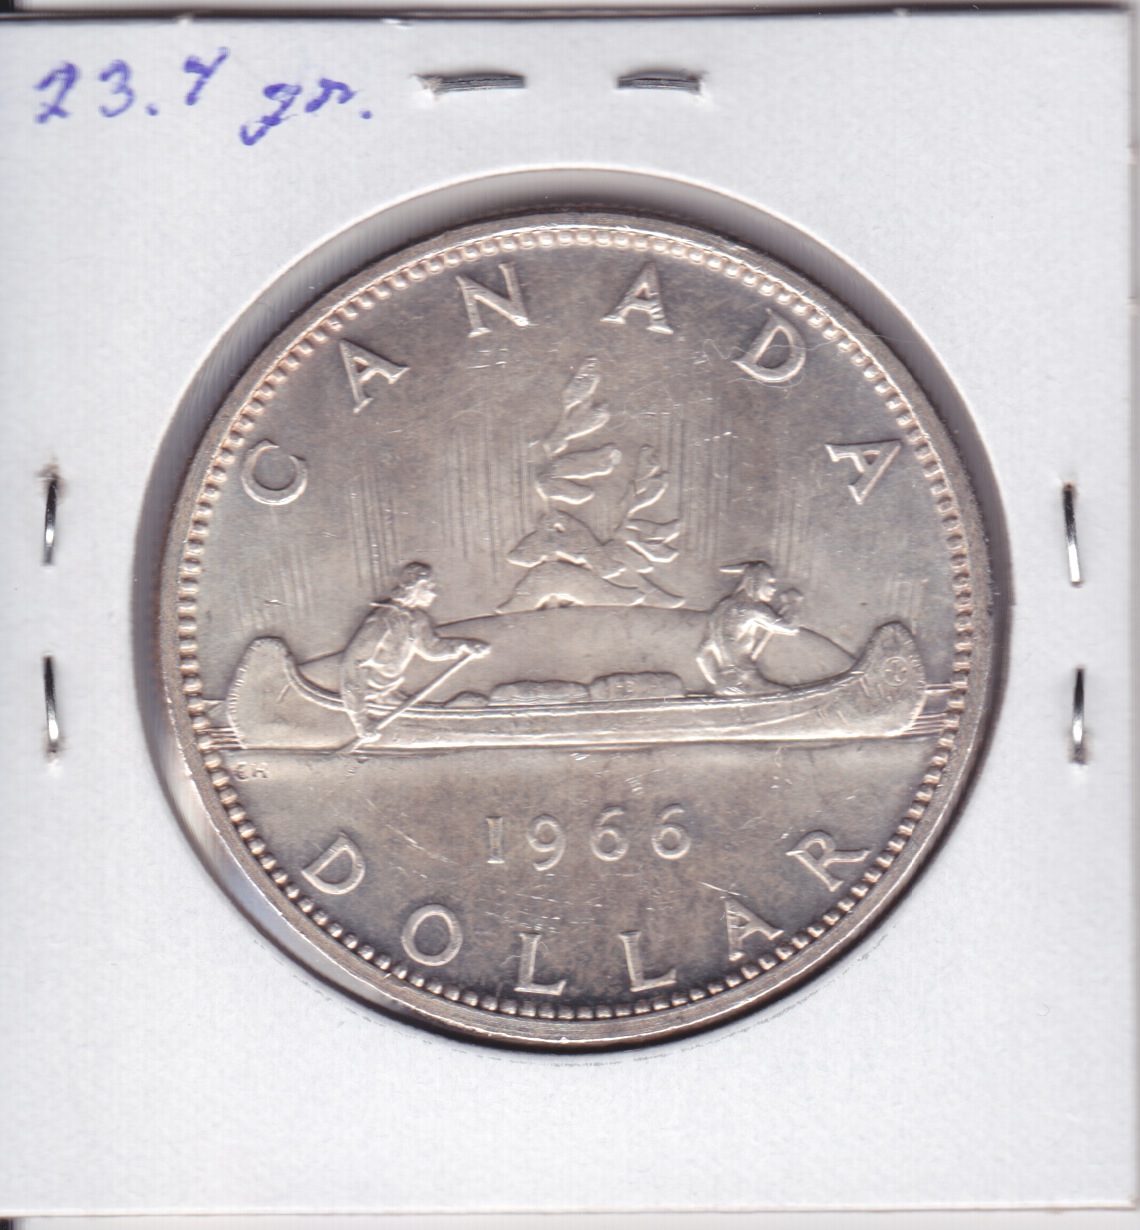 1 dollar 1966 Grosses perles- verso.jpeg